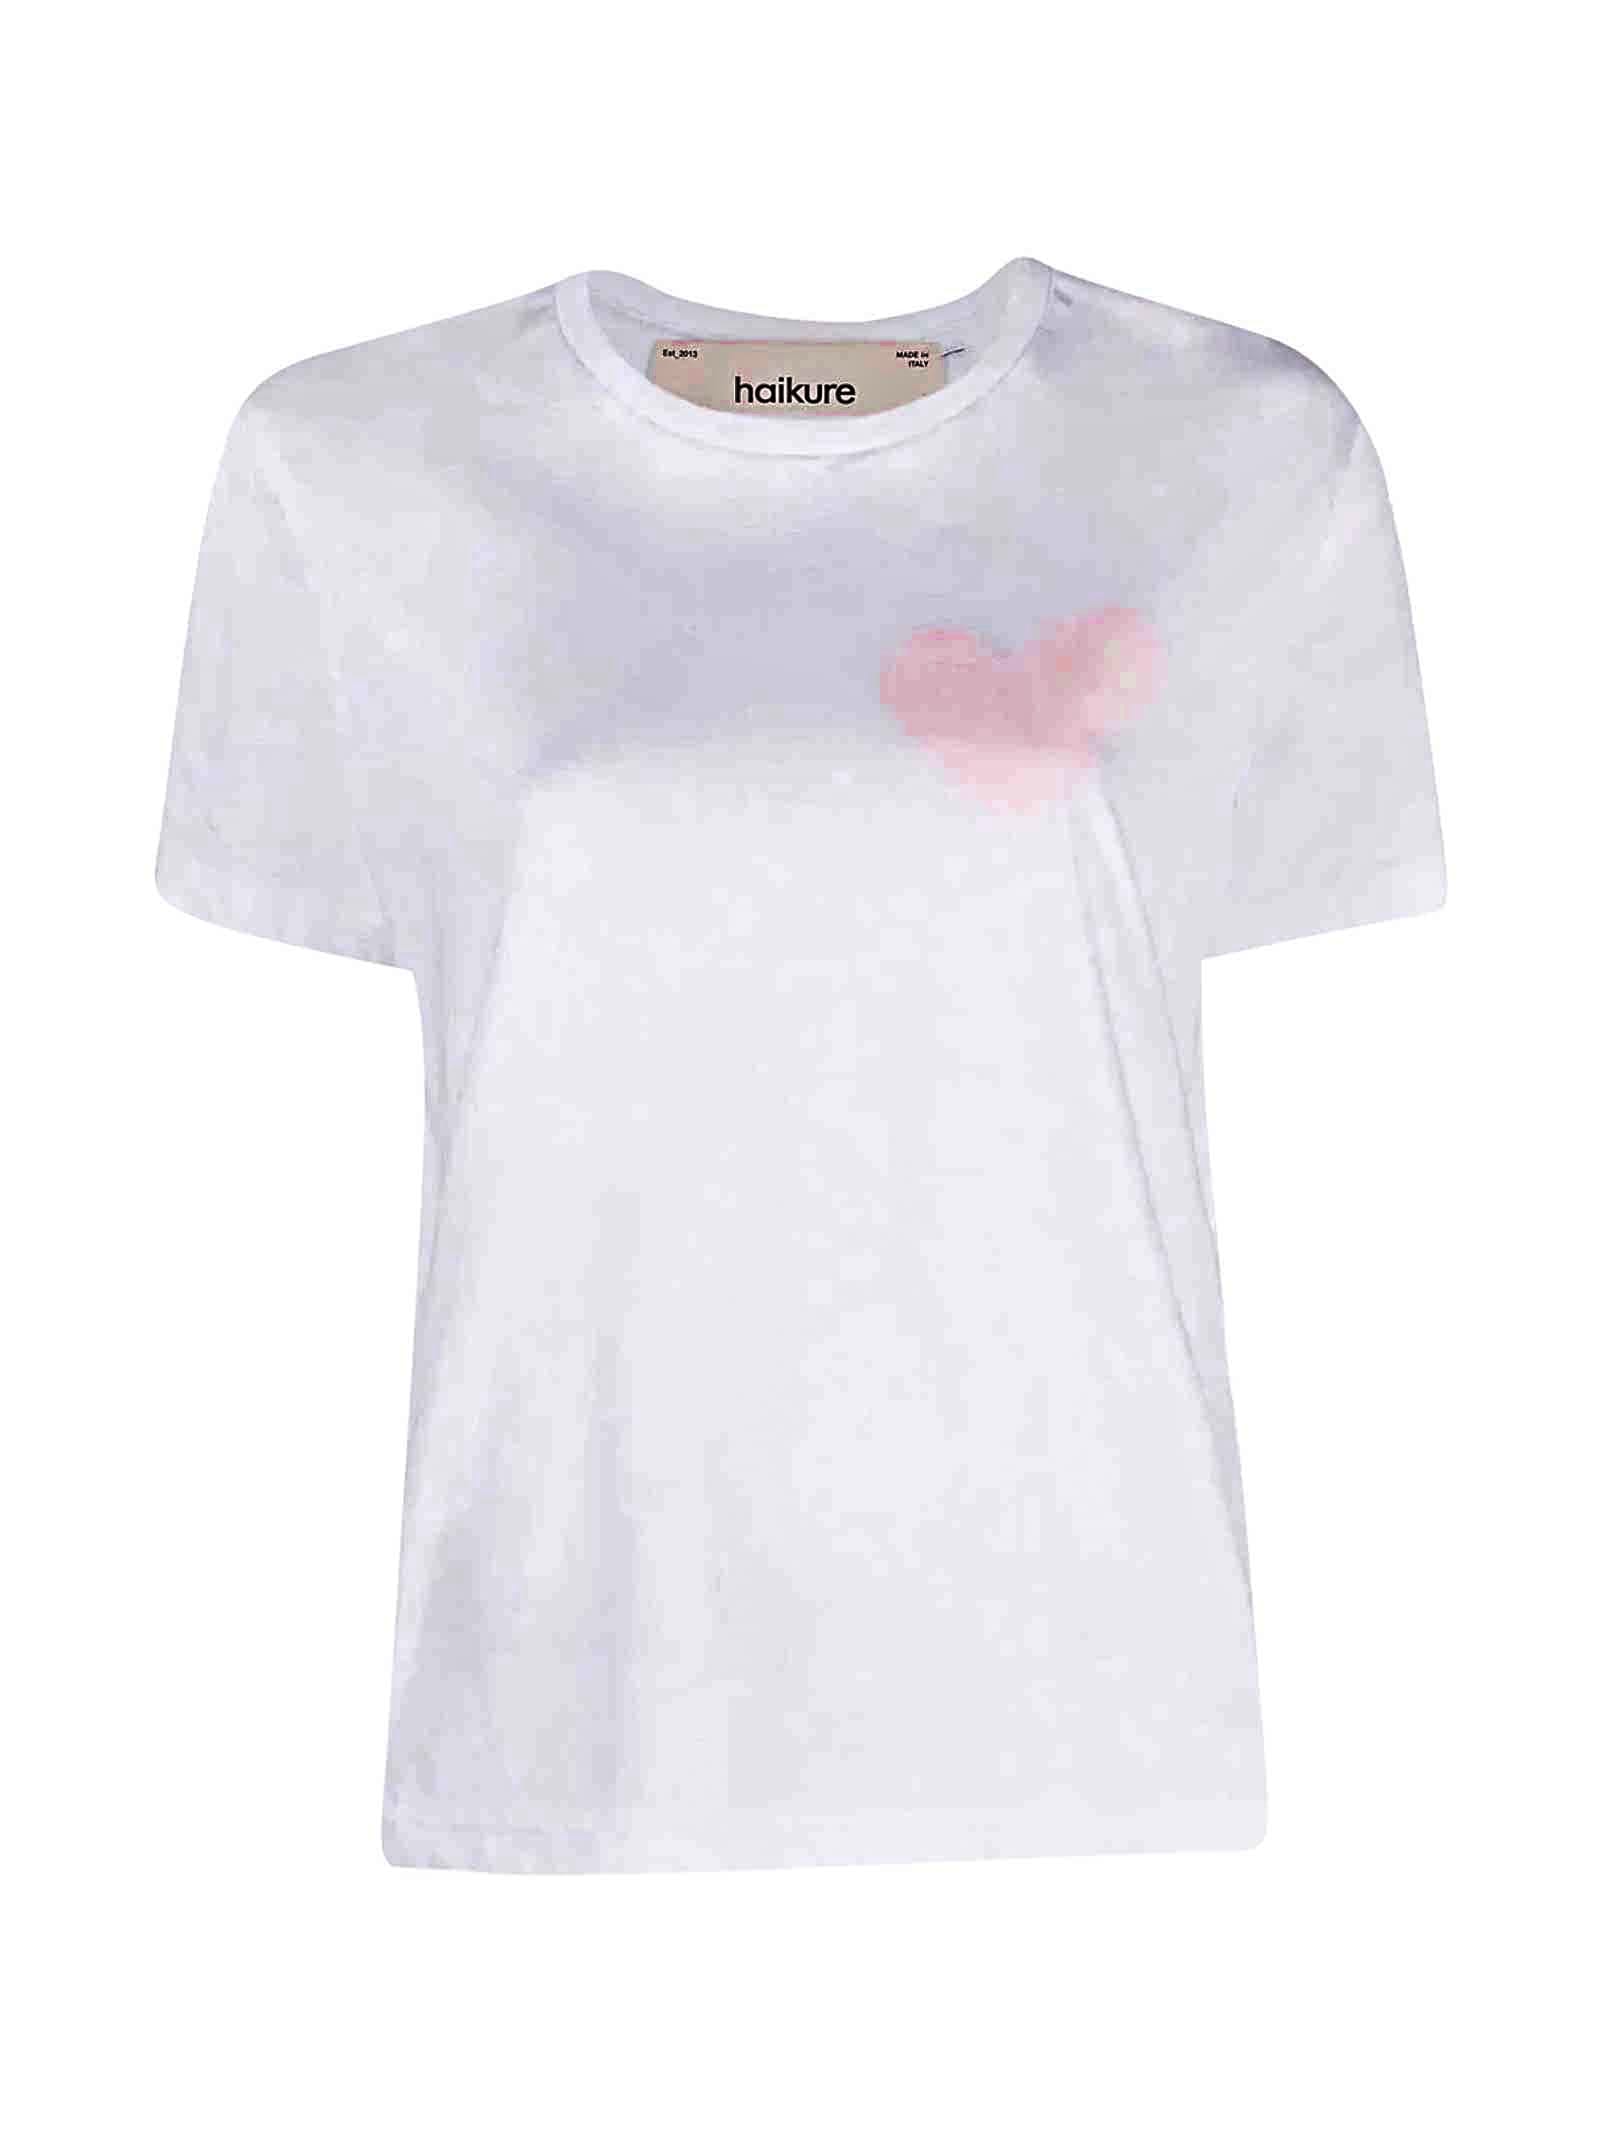 Haikure White T-shirt With Heart Print